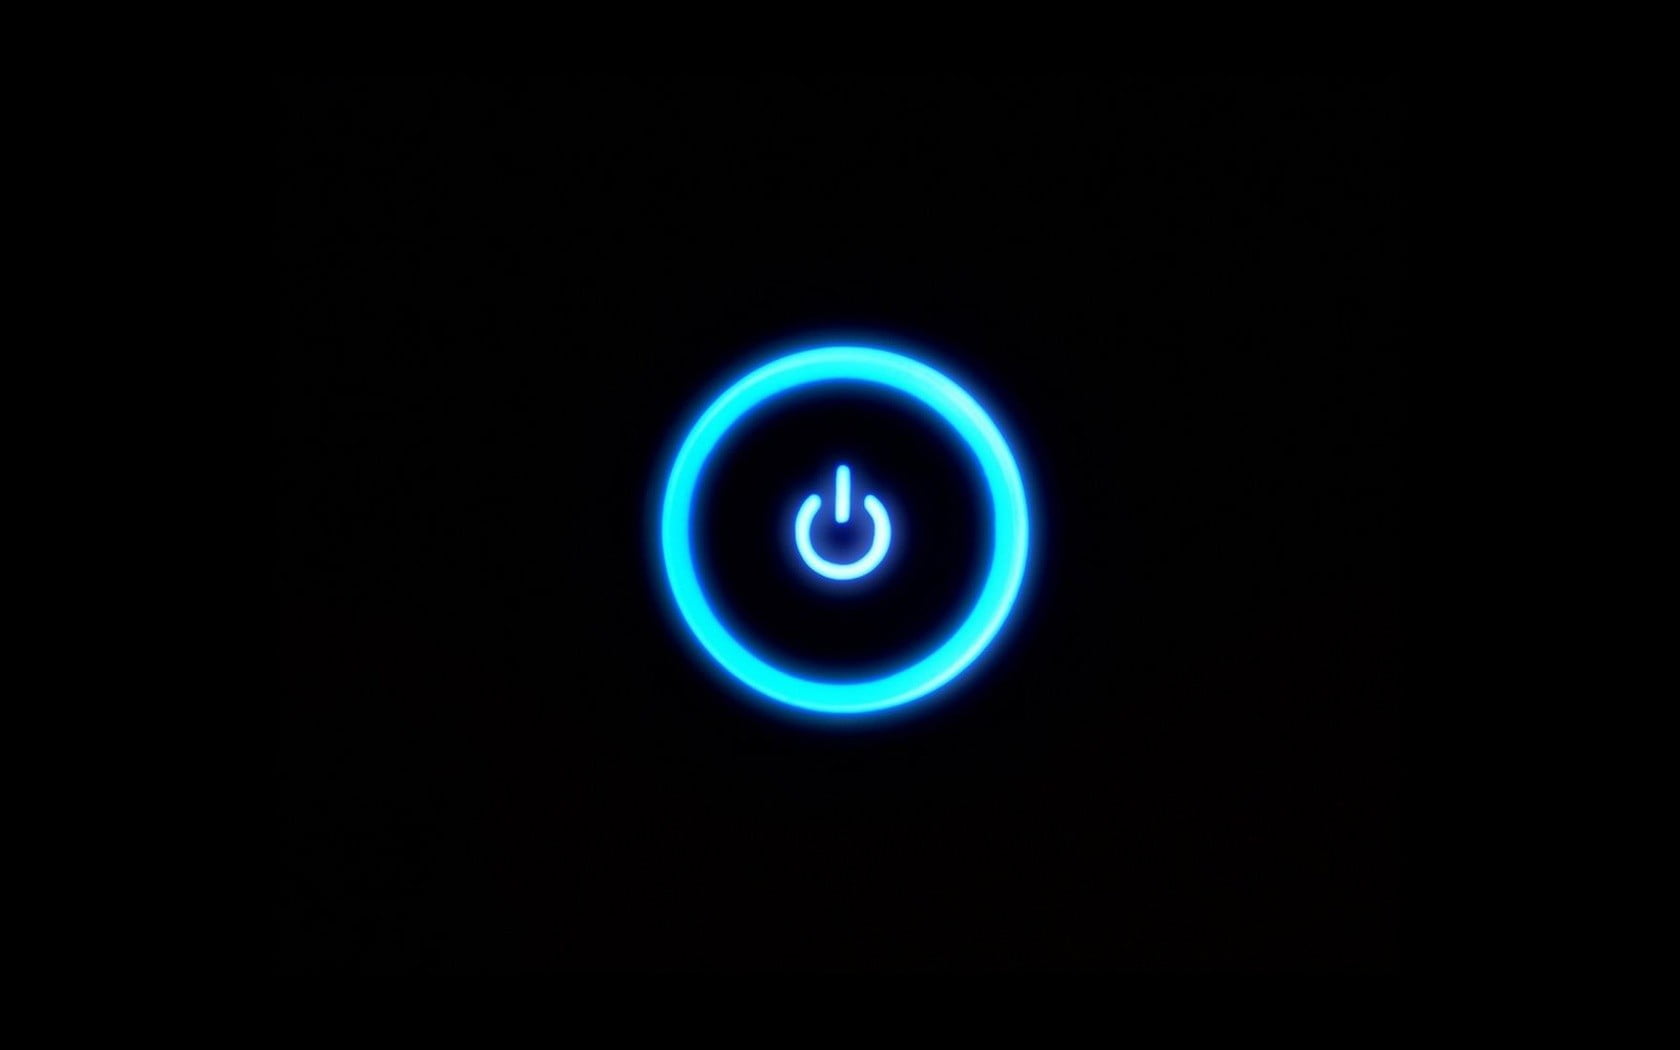 power buttons, blue, night, illuminated, communication, light - natural phenomenon